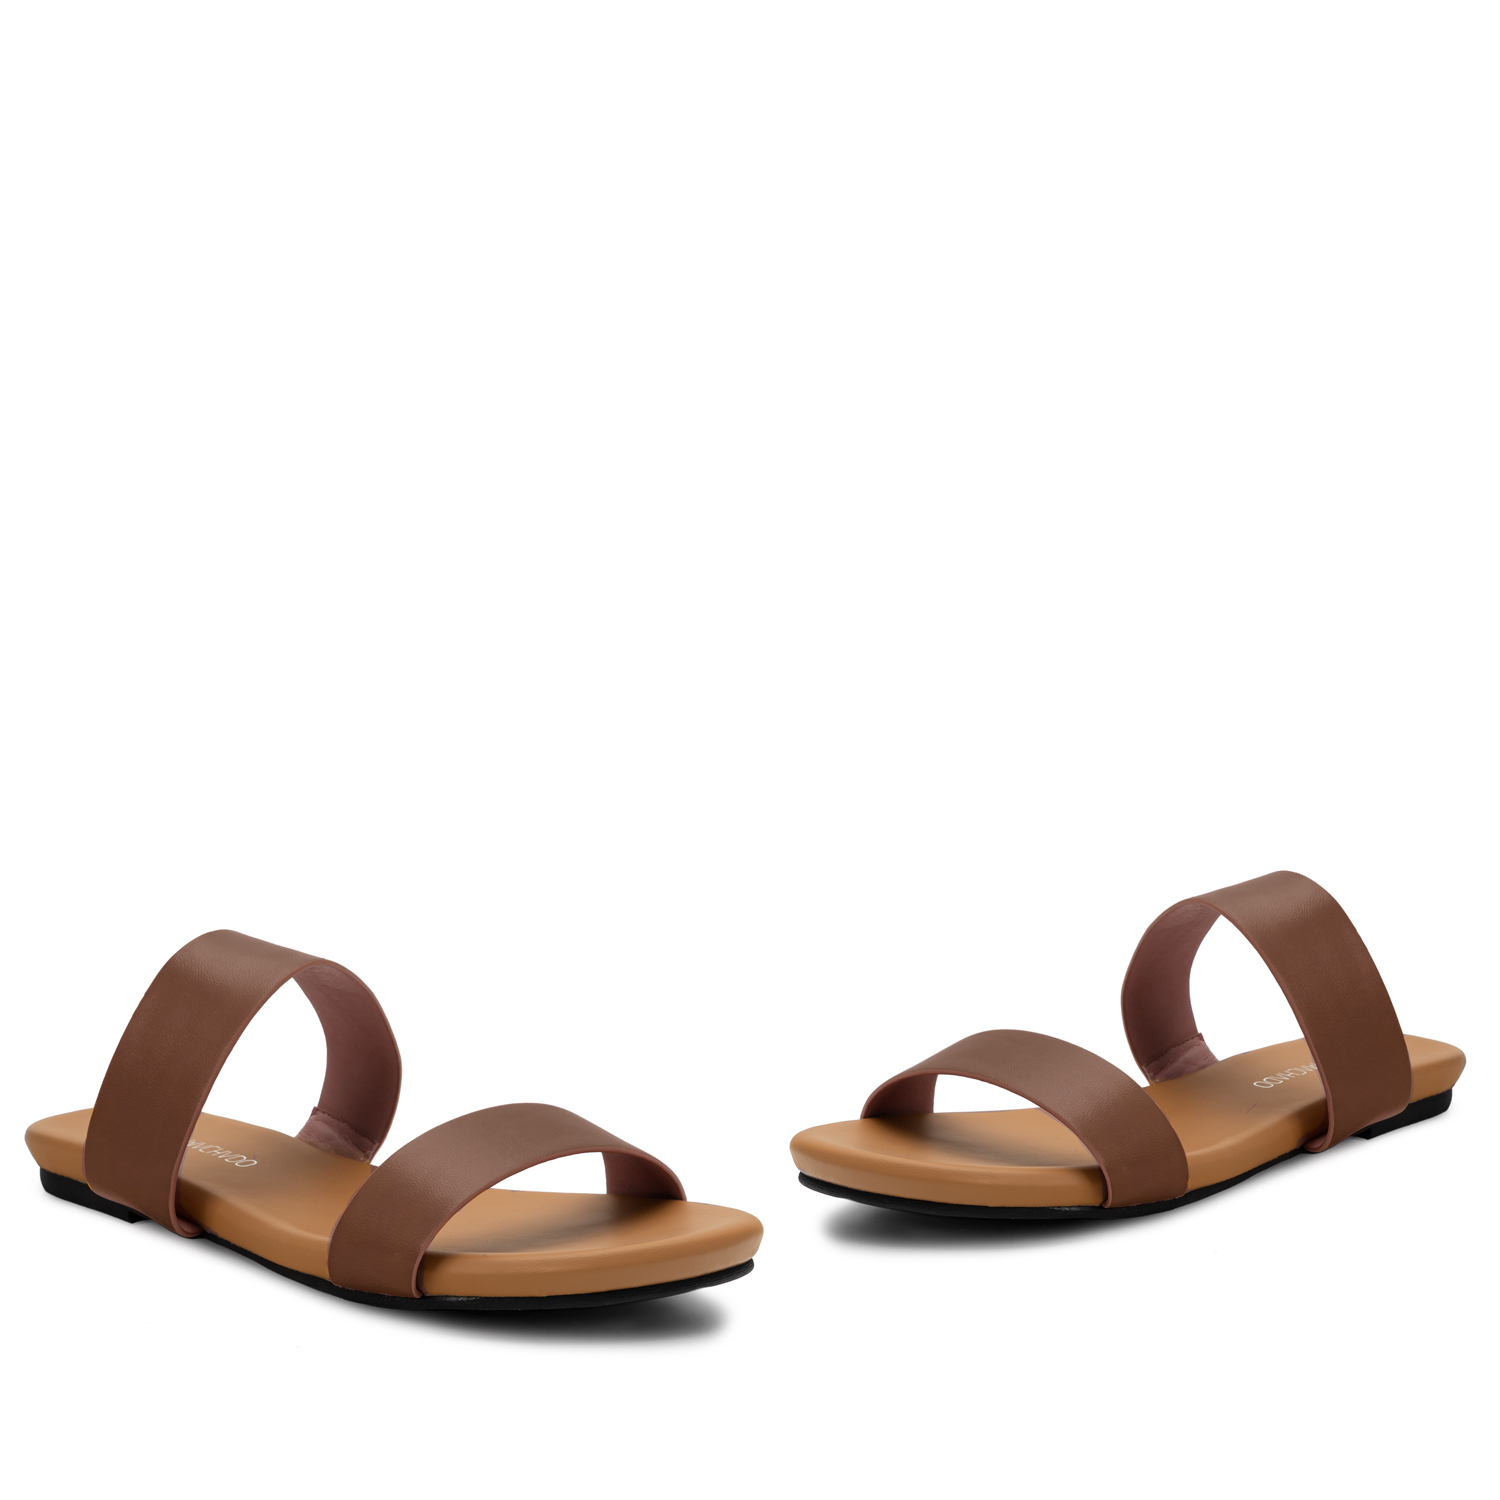 Sandalia plana soft marrón 